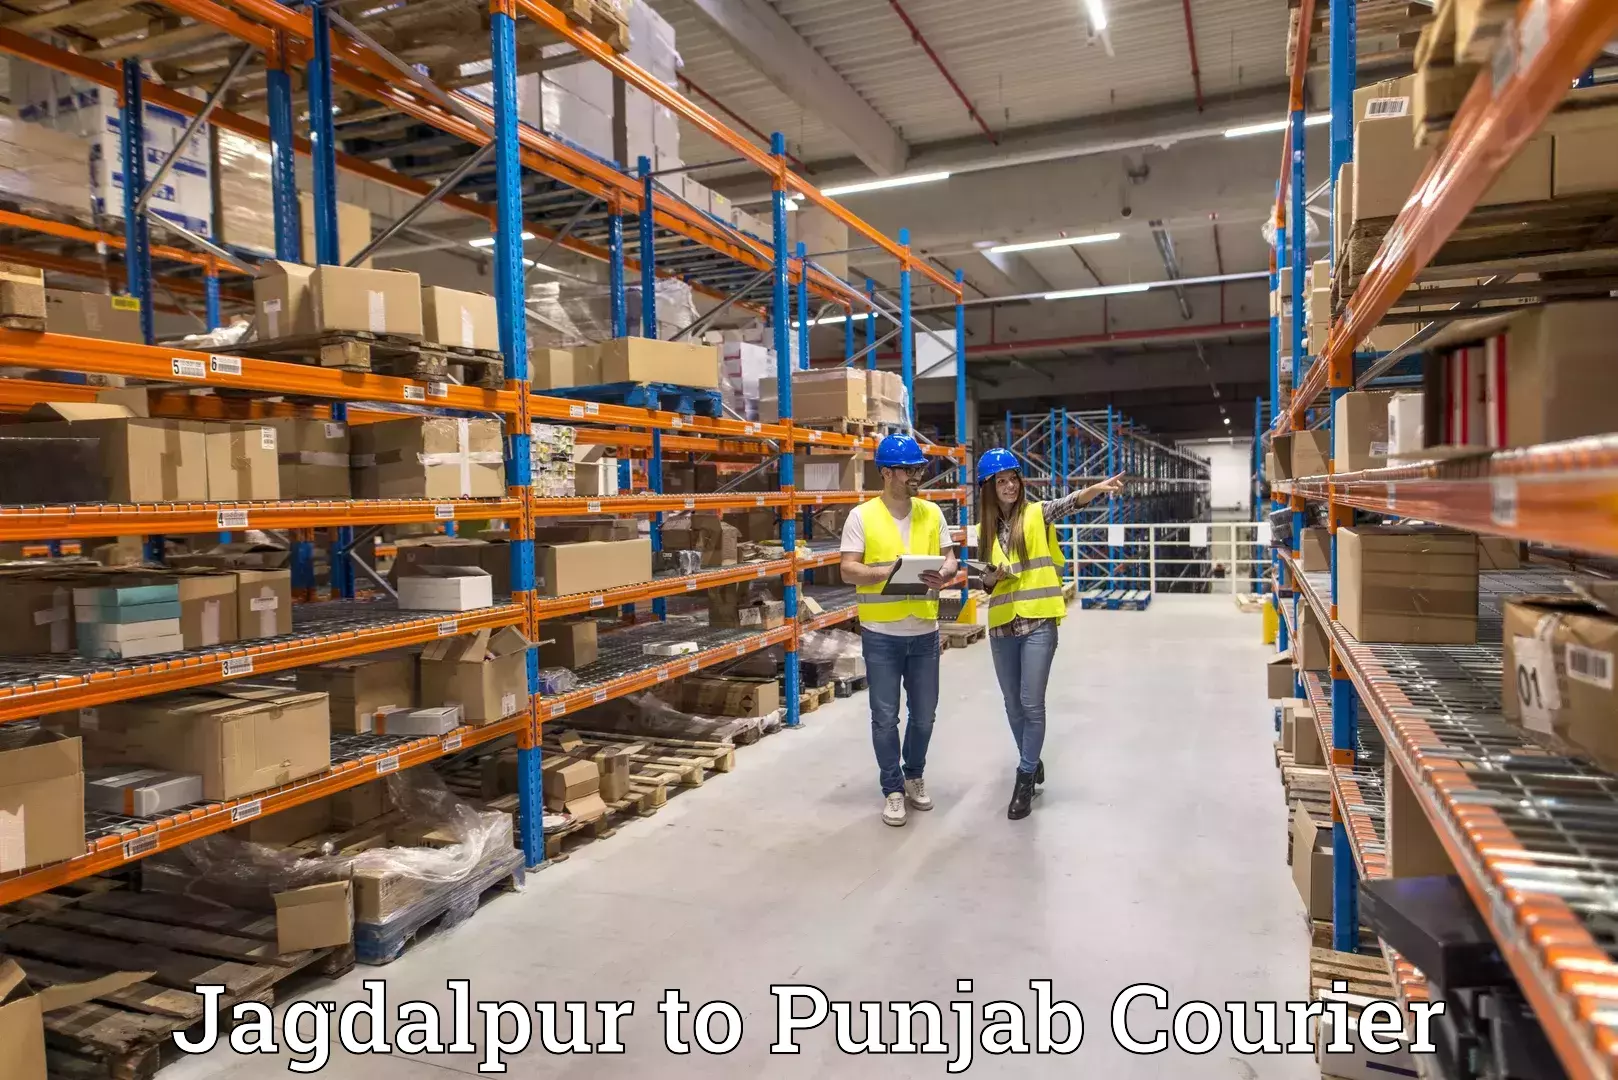 Courier service innovation Jagdalpur to Zirakpur